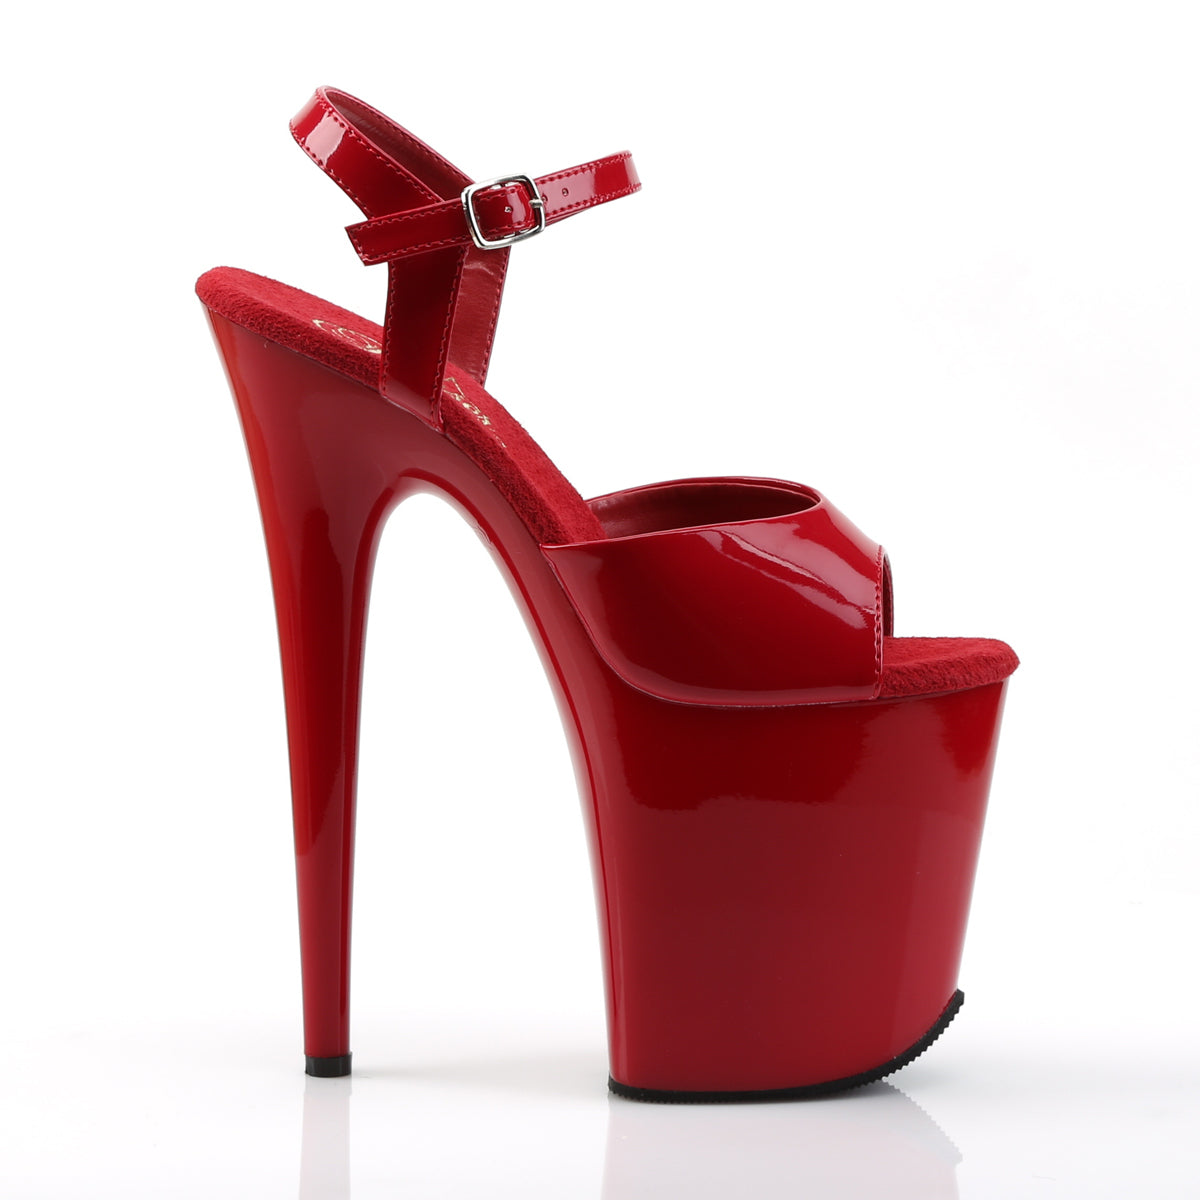 FLAMINGO-809 Pleaser 8 Inch Heel Red Pole Dancing Platforms-Pleaser- Sexy Shoes Fetish Heels